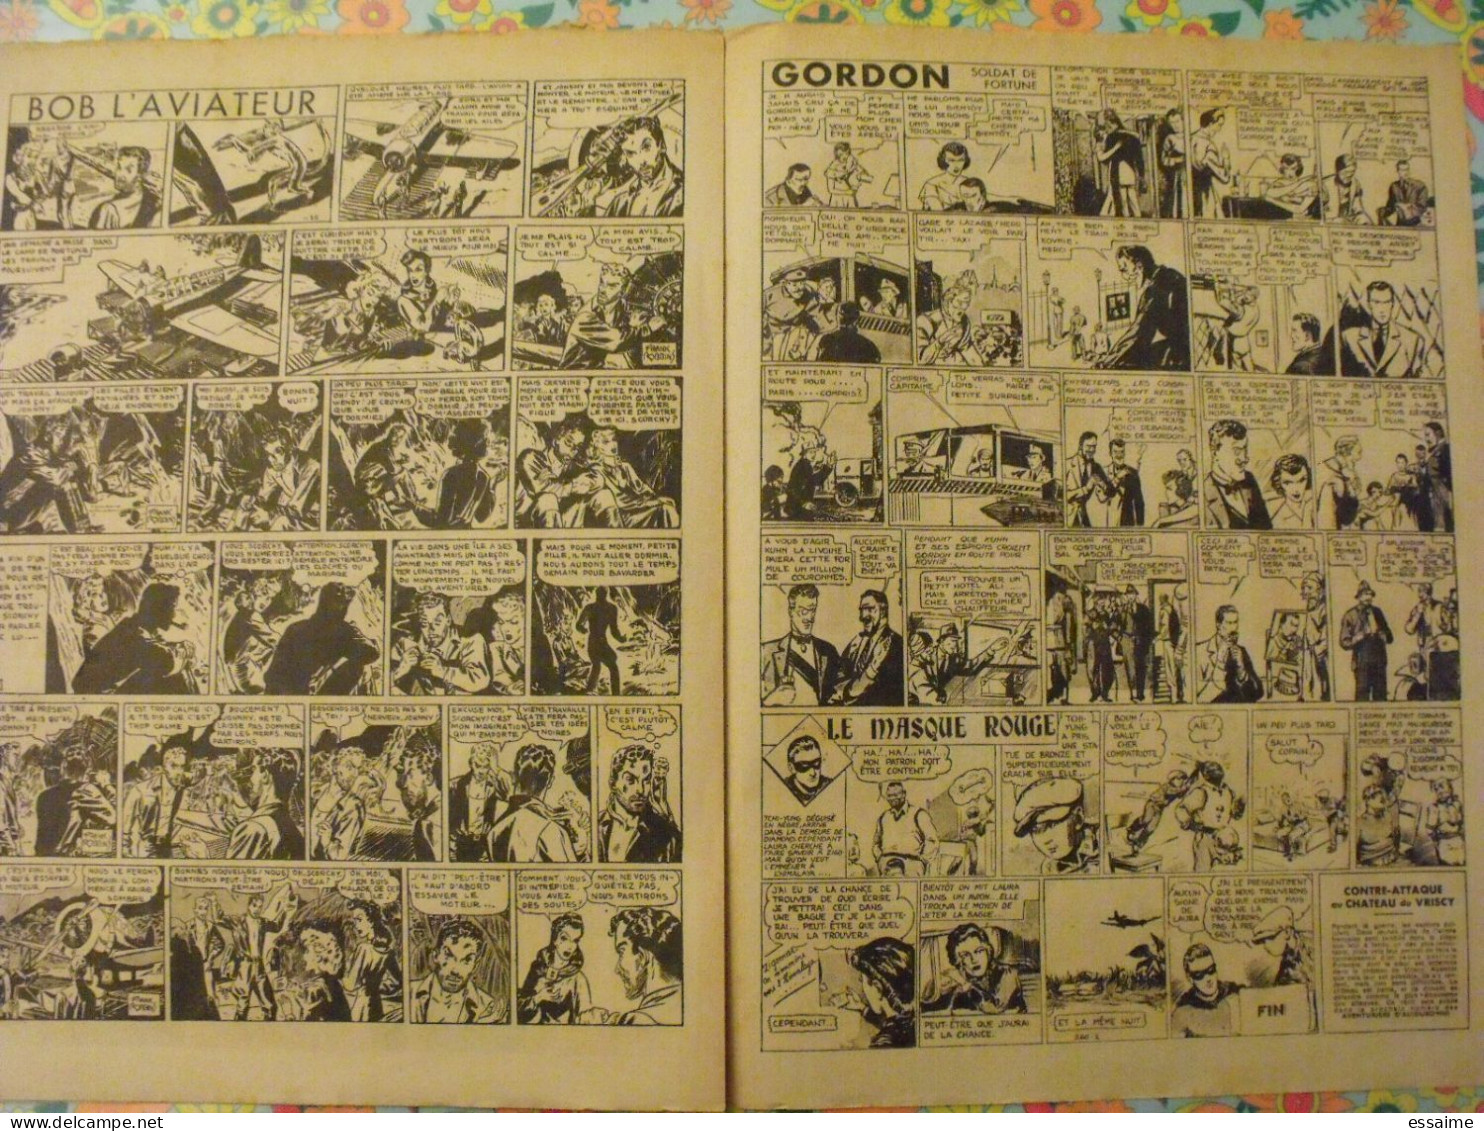 7 n° de Hurrah ! de 1940-41. Brick Bradford, Tarzan, le roi de la police montée, gordon. A redécouvrir